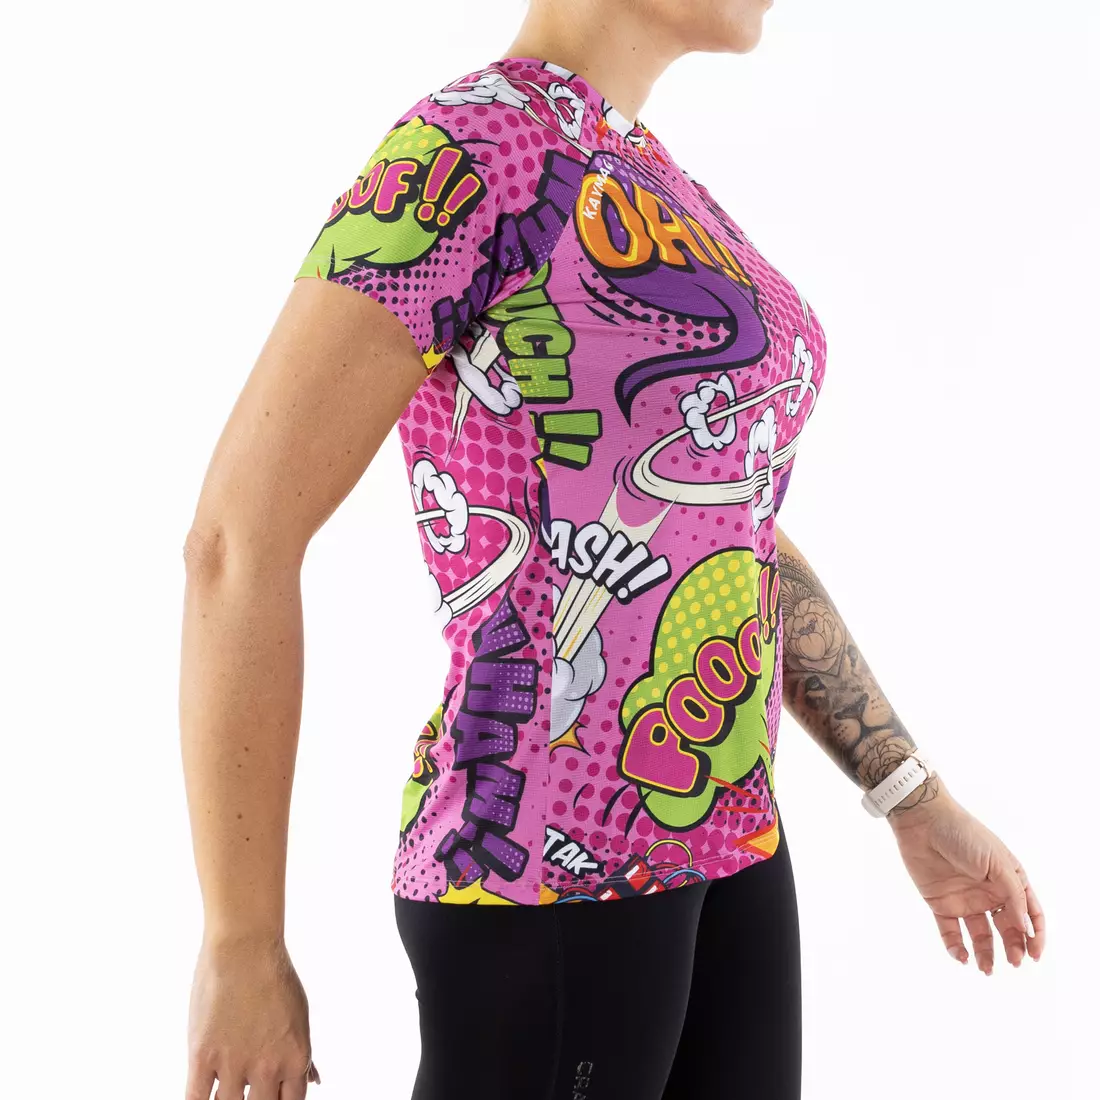 KAYMAQ W27 PRO MESH damska koszulka sportowa / biegowa, różowa